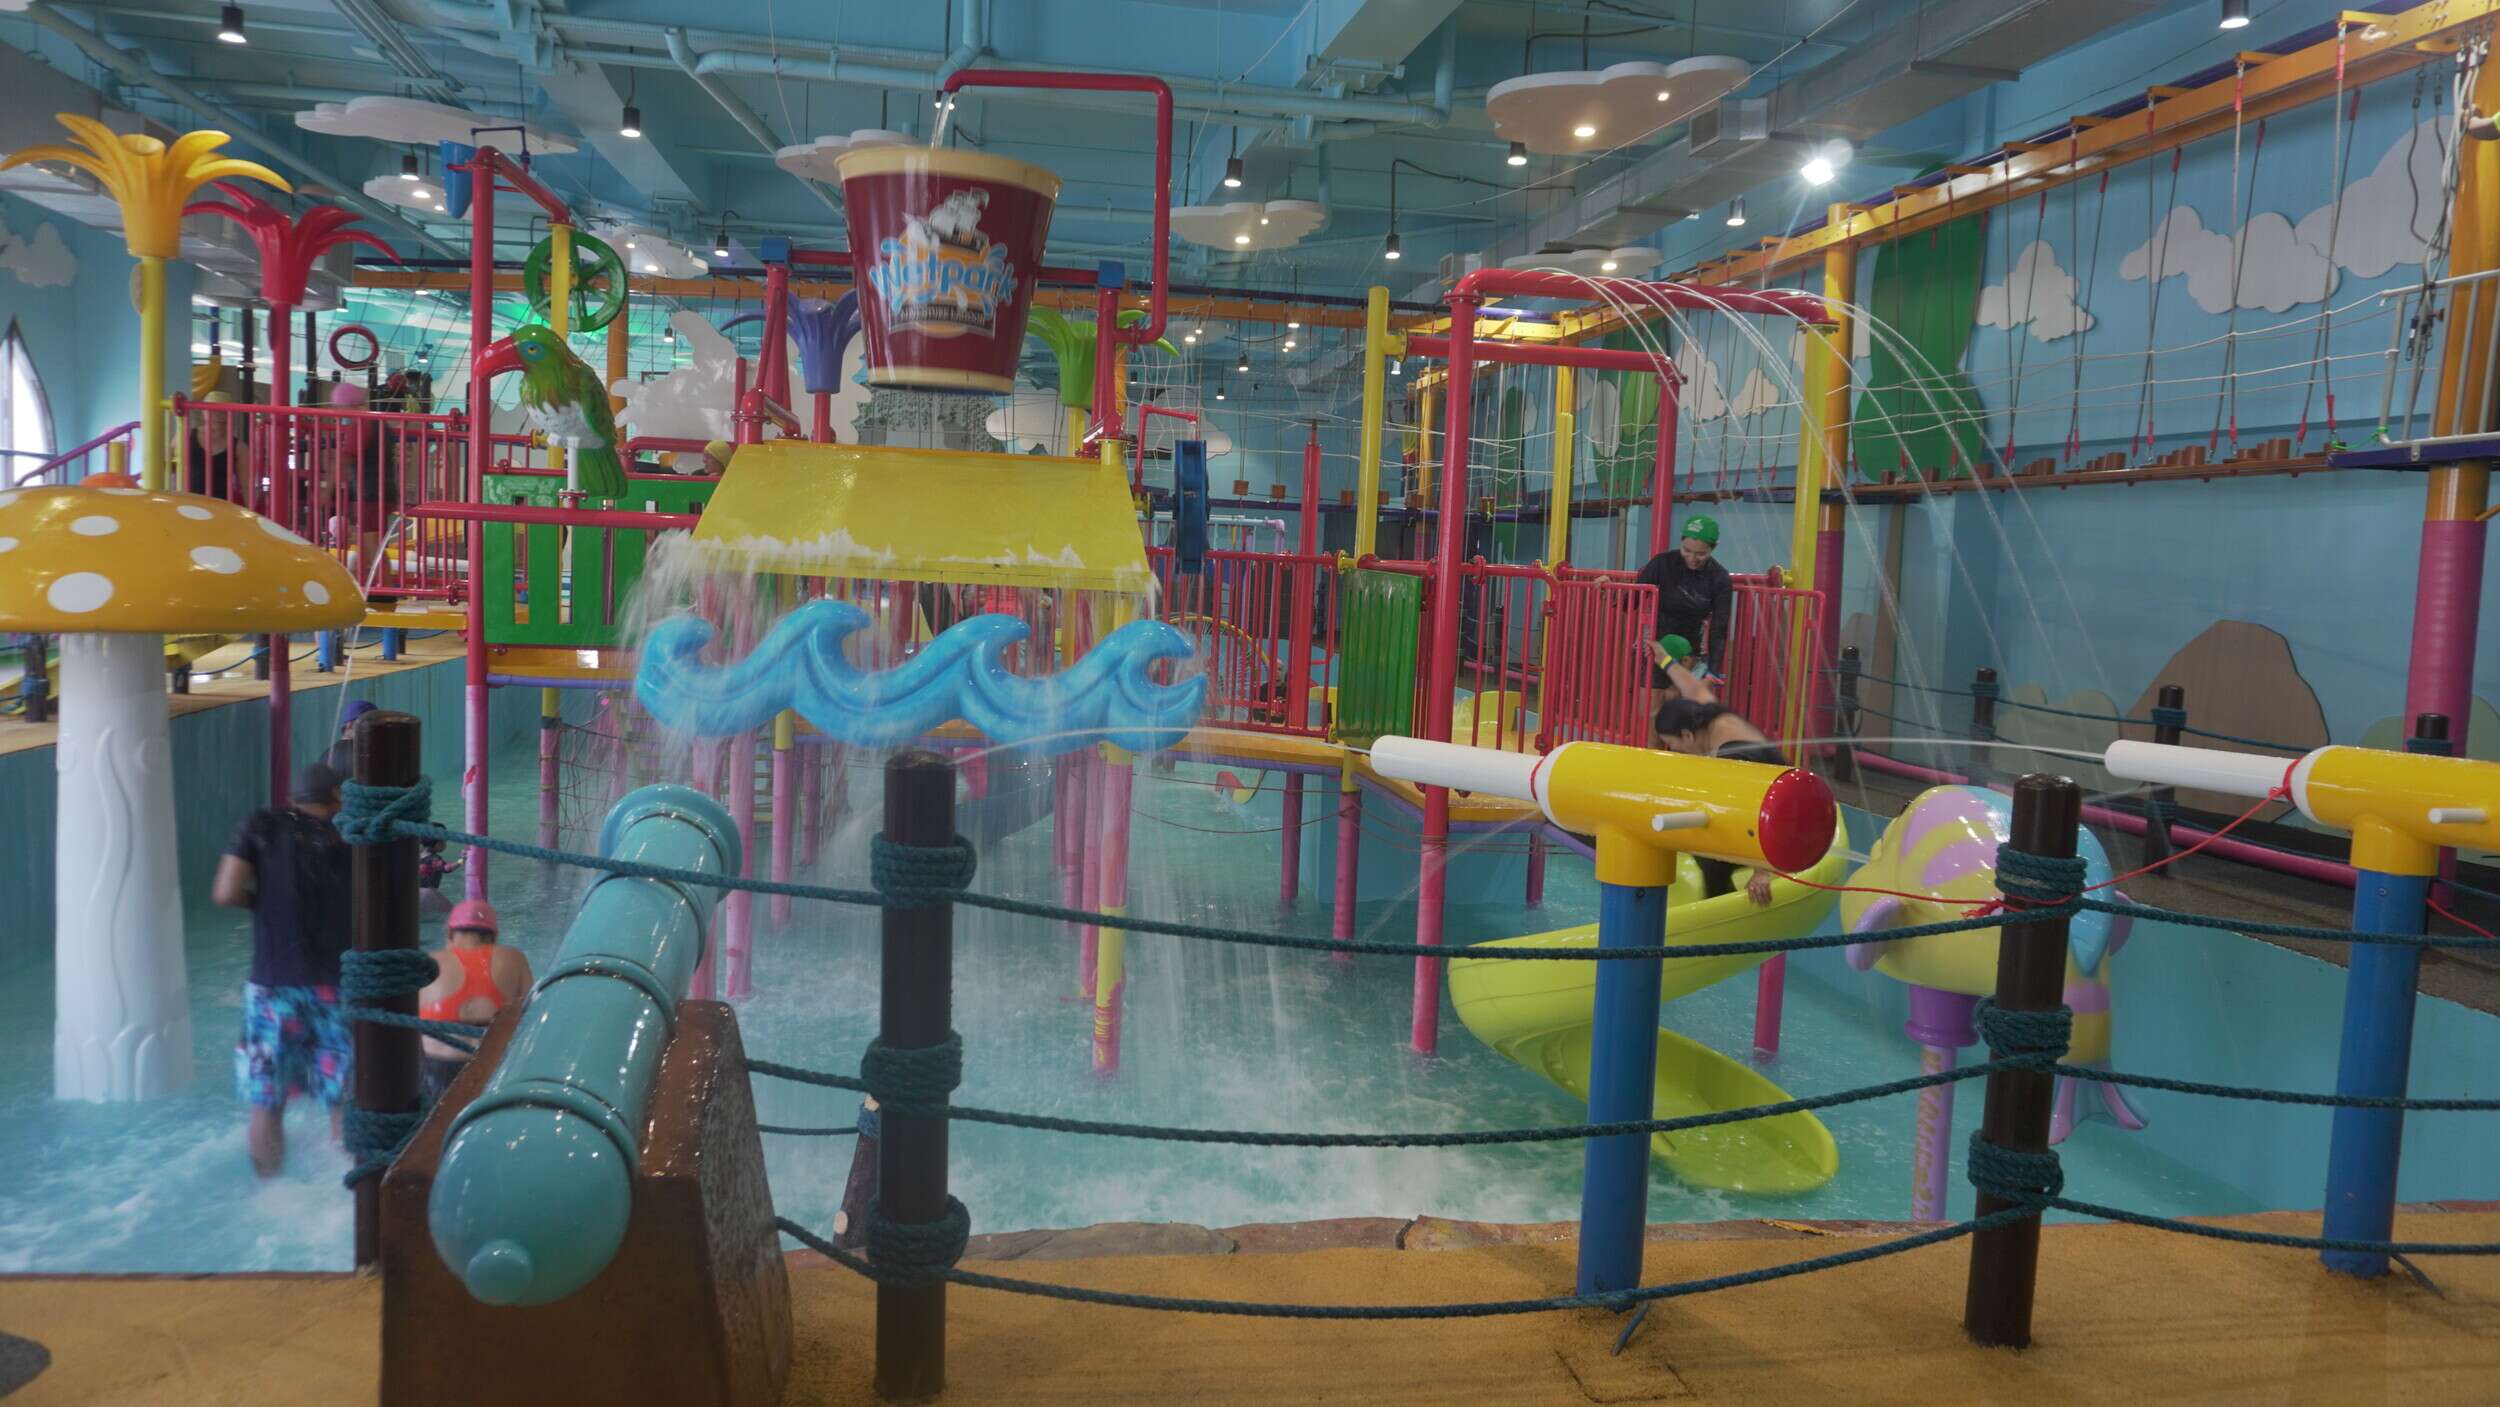 Wetpark Adventure Lagoon – First indoor Waterpark in PH!